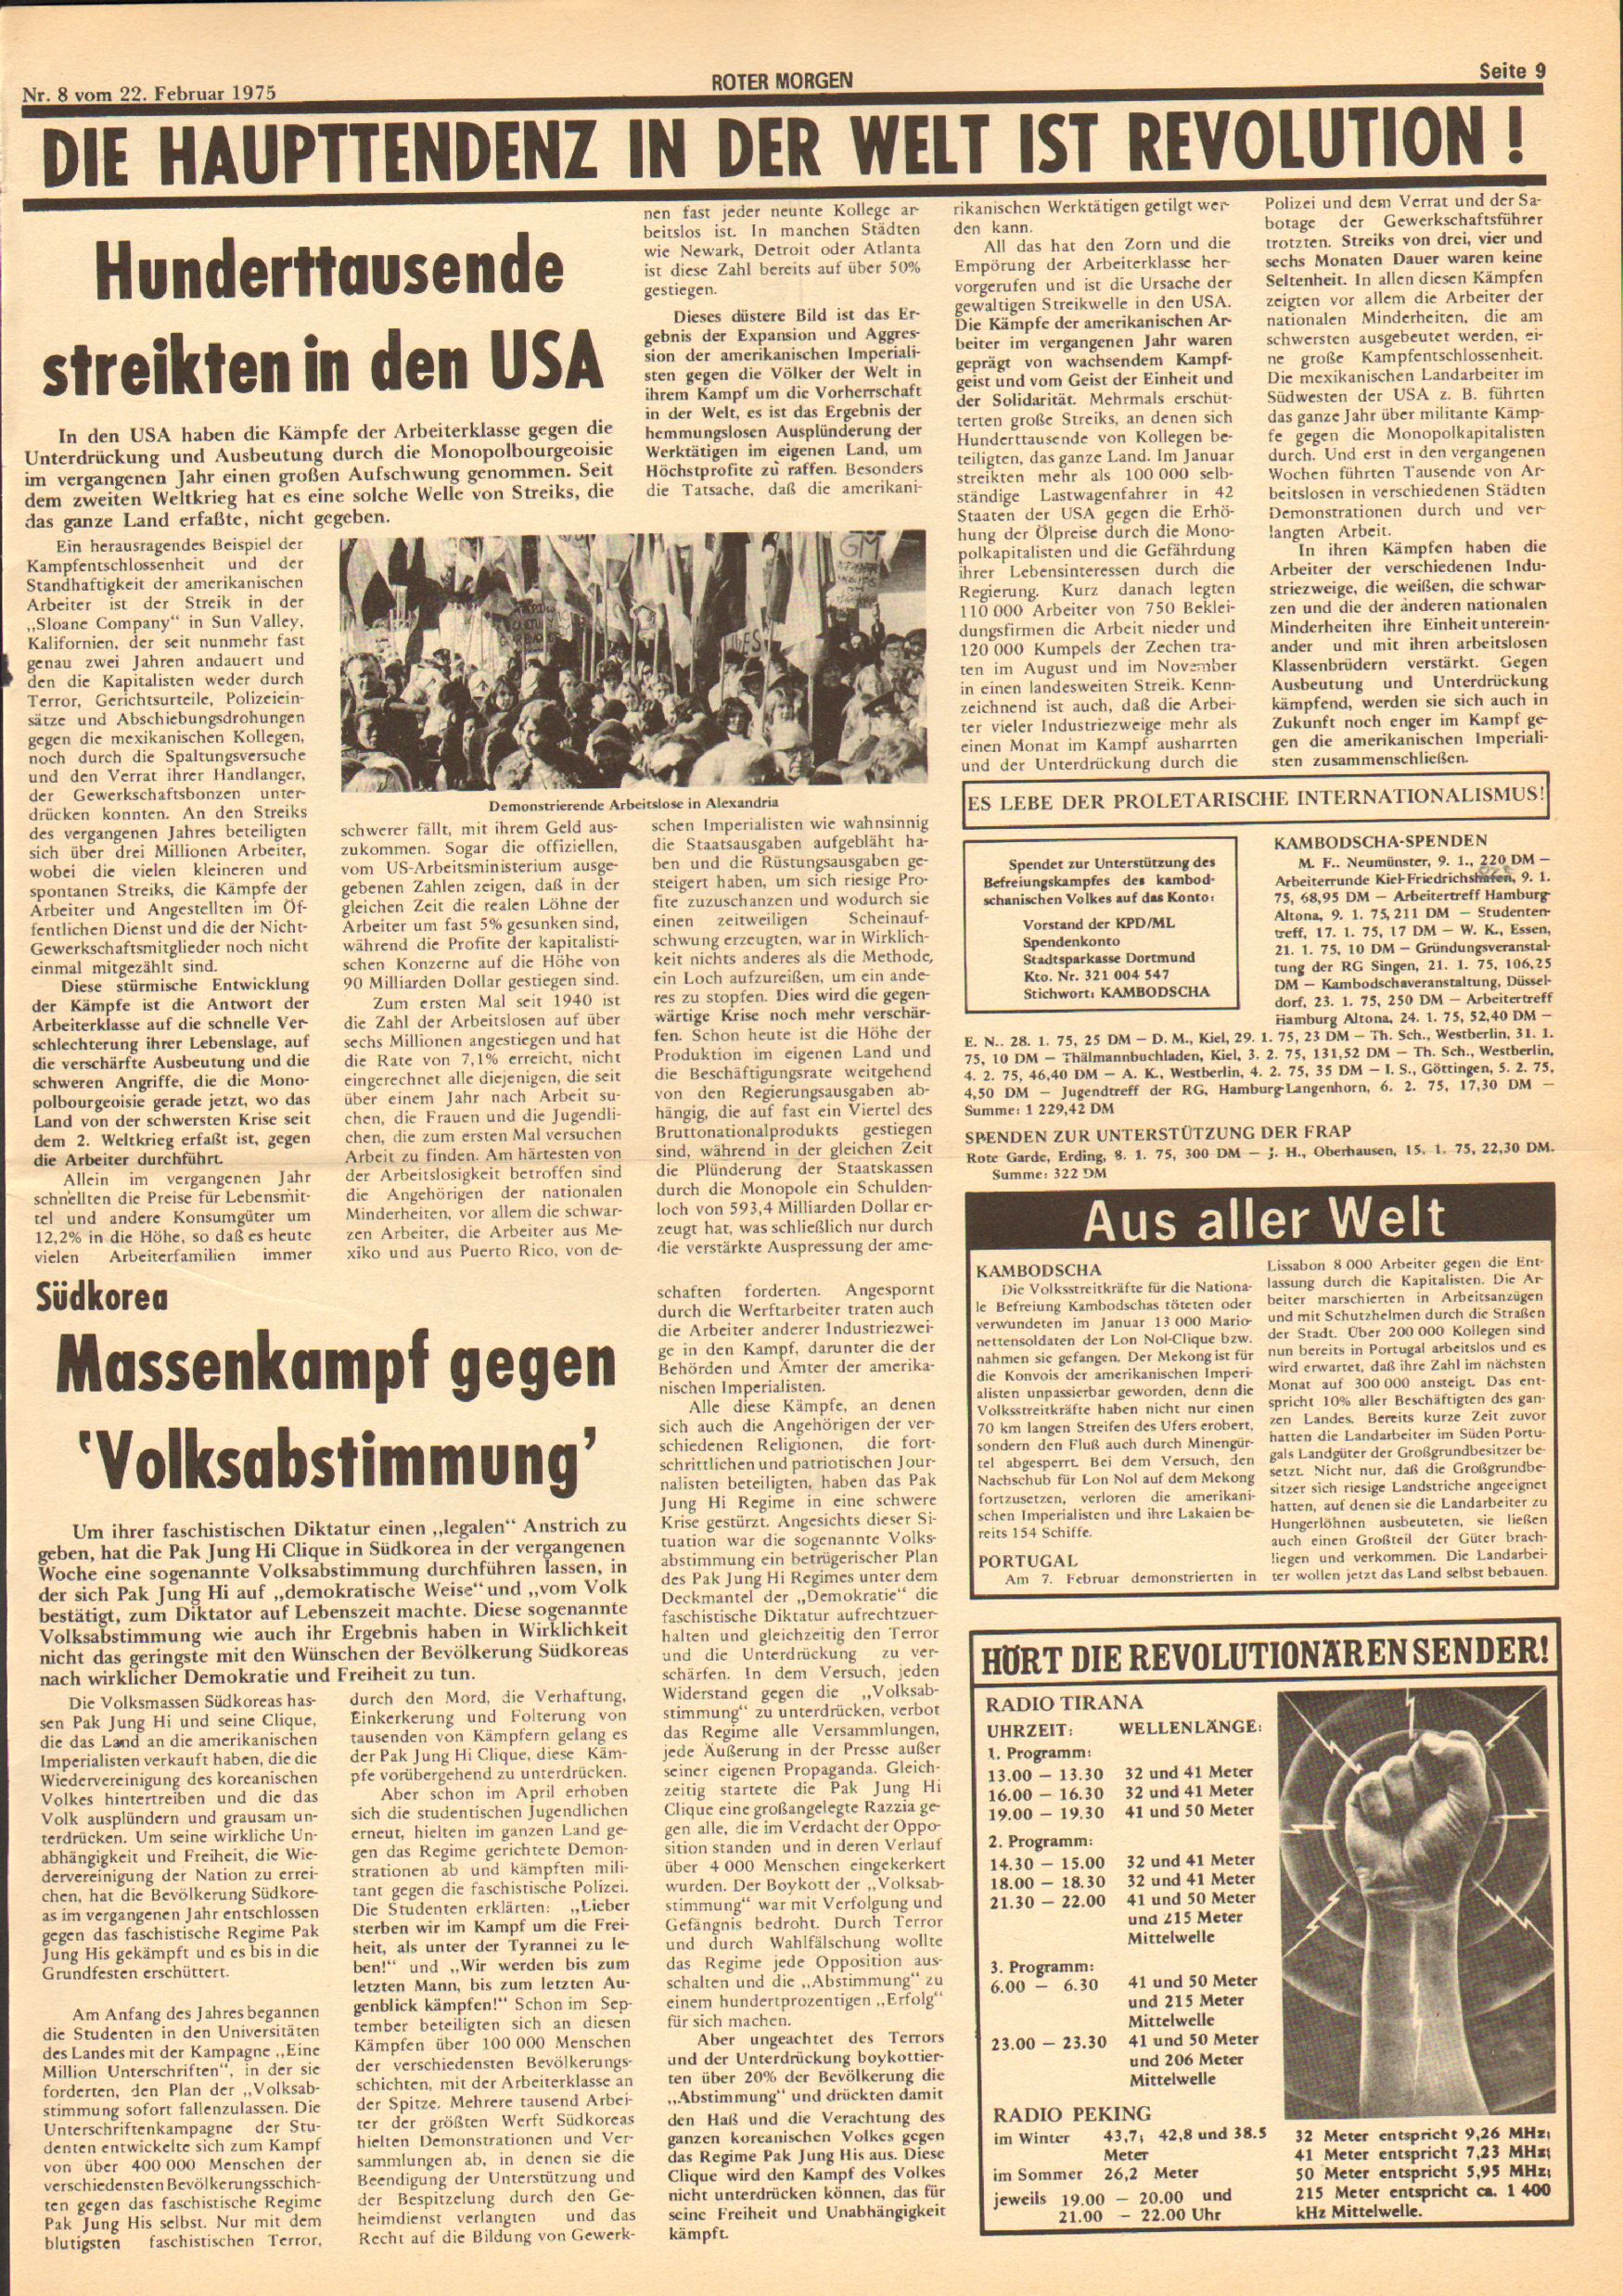 Roter Morgen, 9. Jg.,22. Februar 1975, Nr. 8, Seite 9